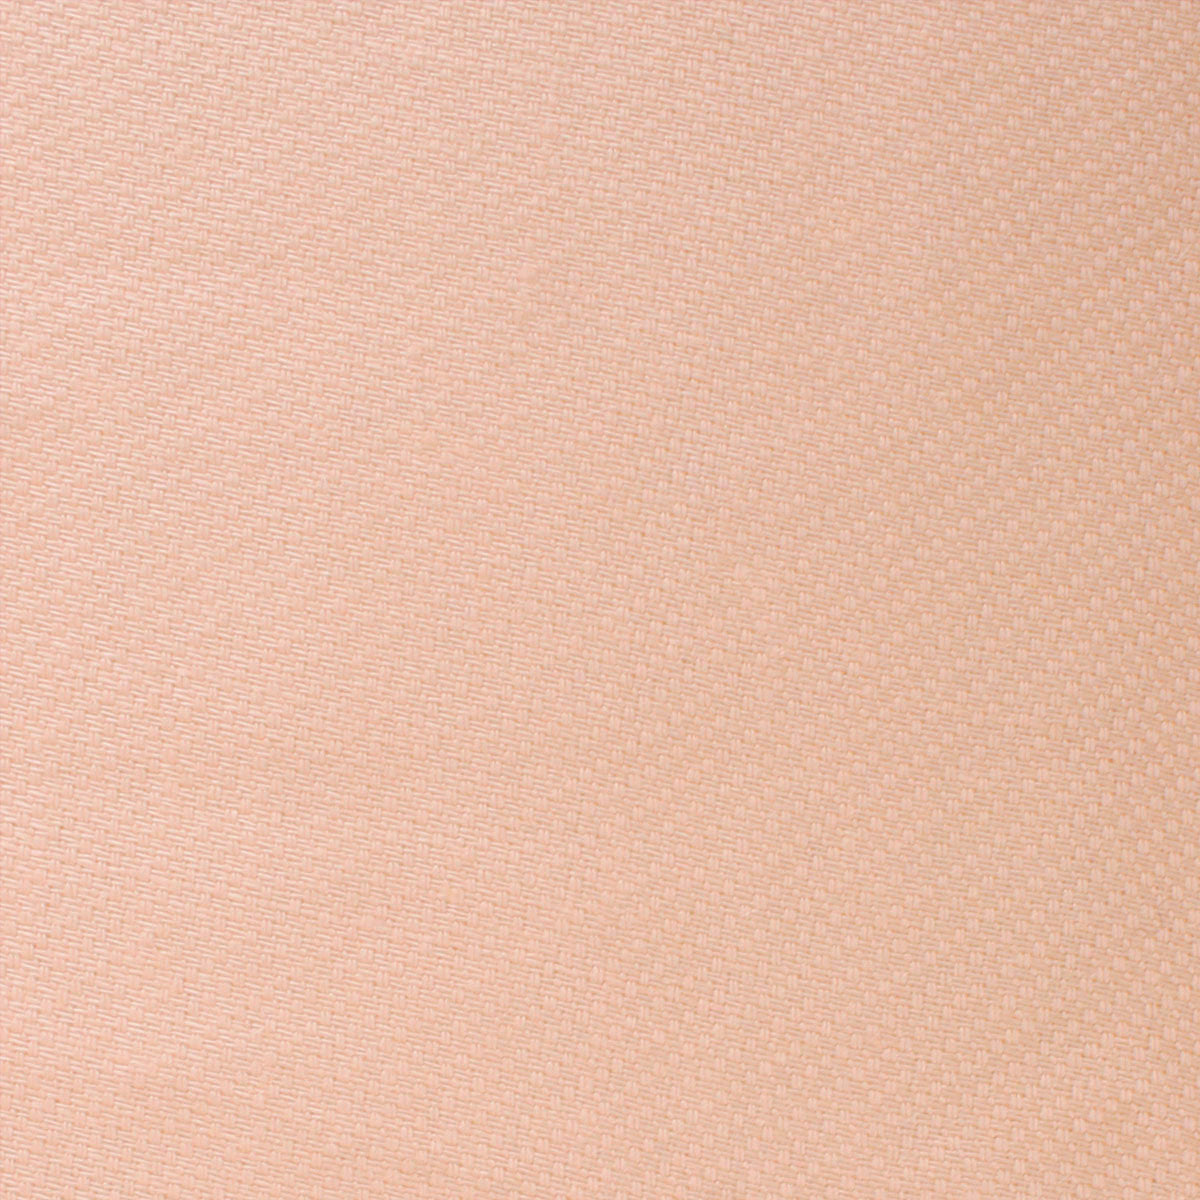 Blush Beige Linen Pocket Square Fabric